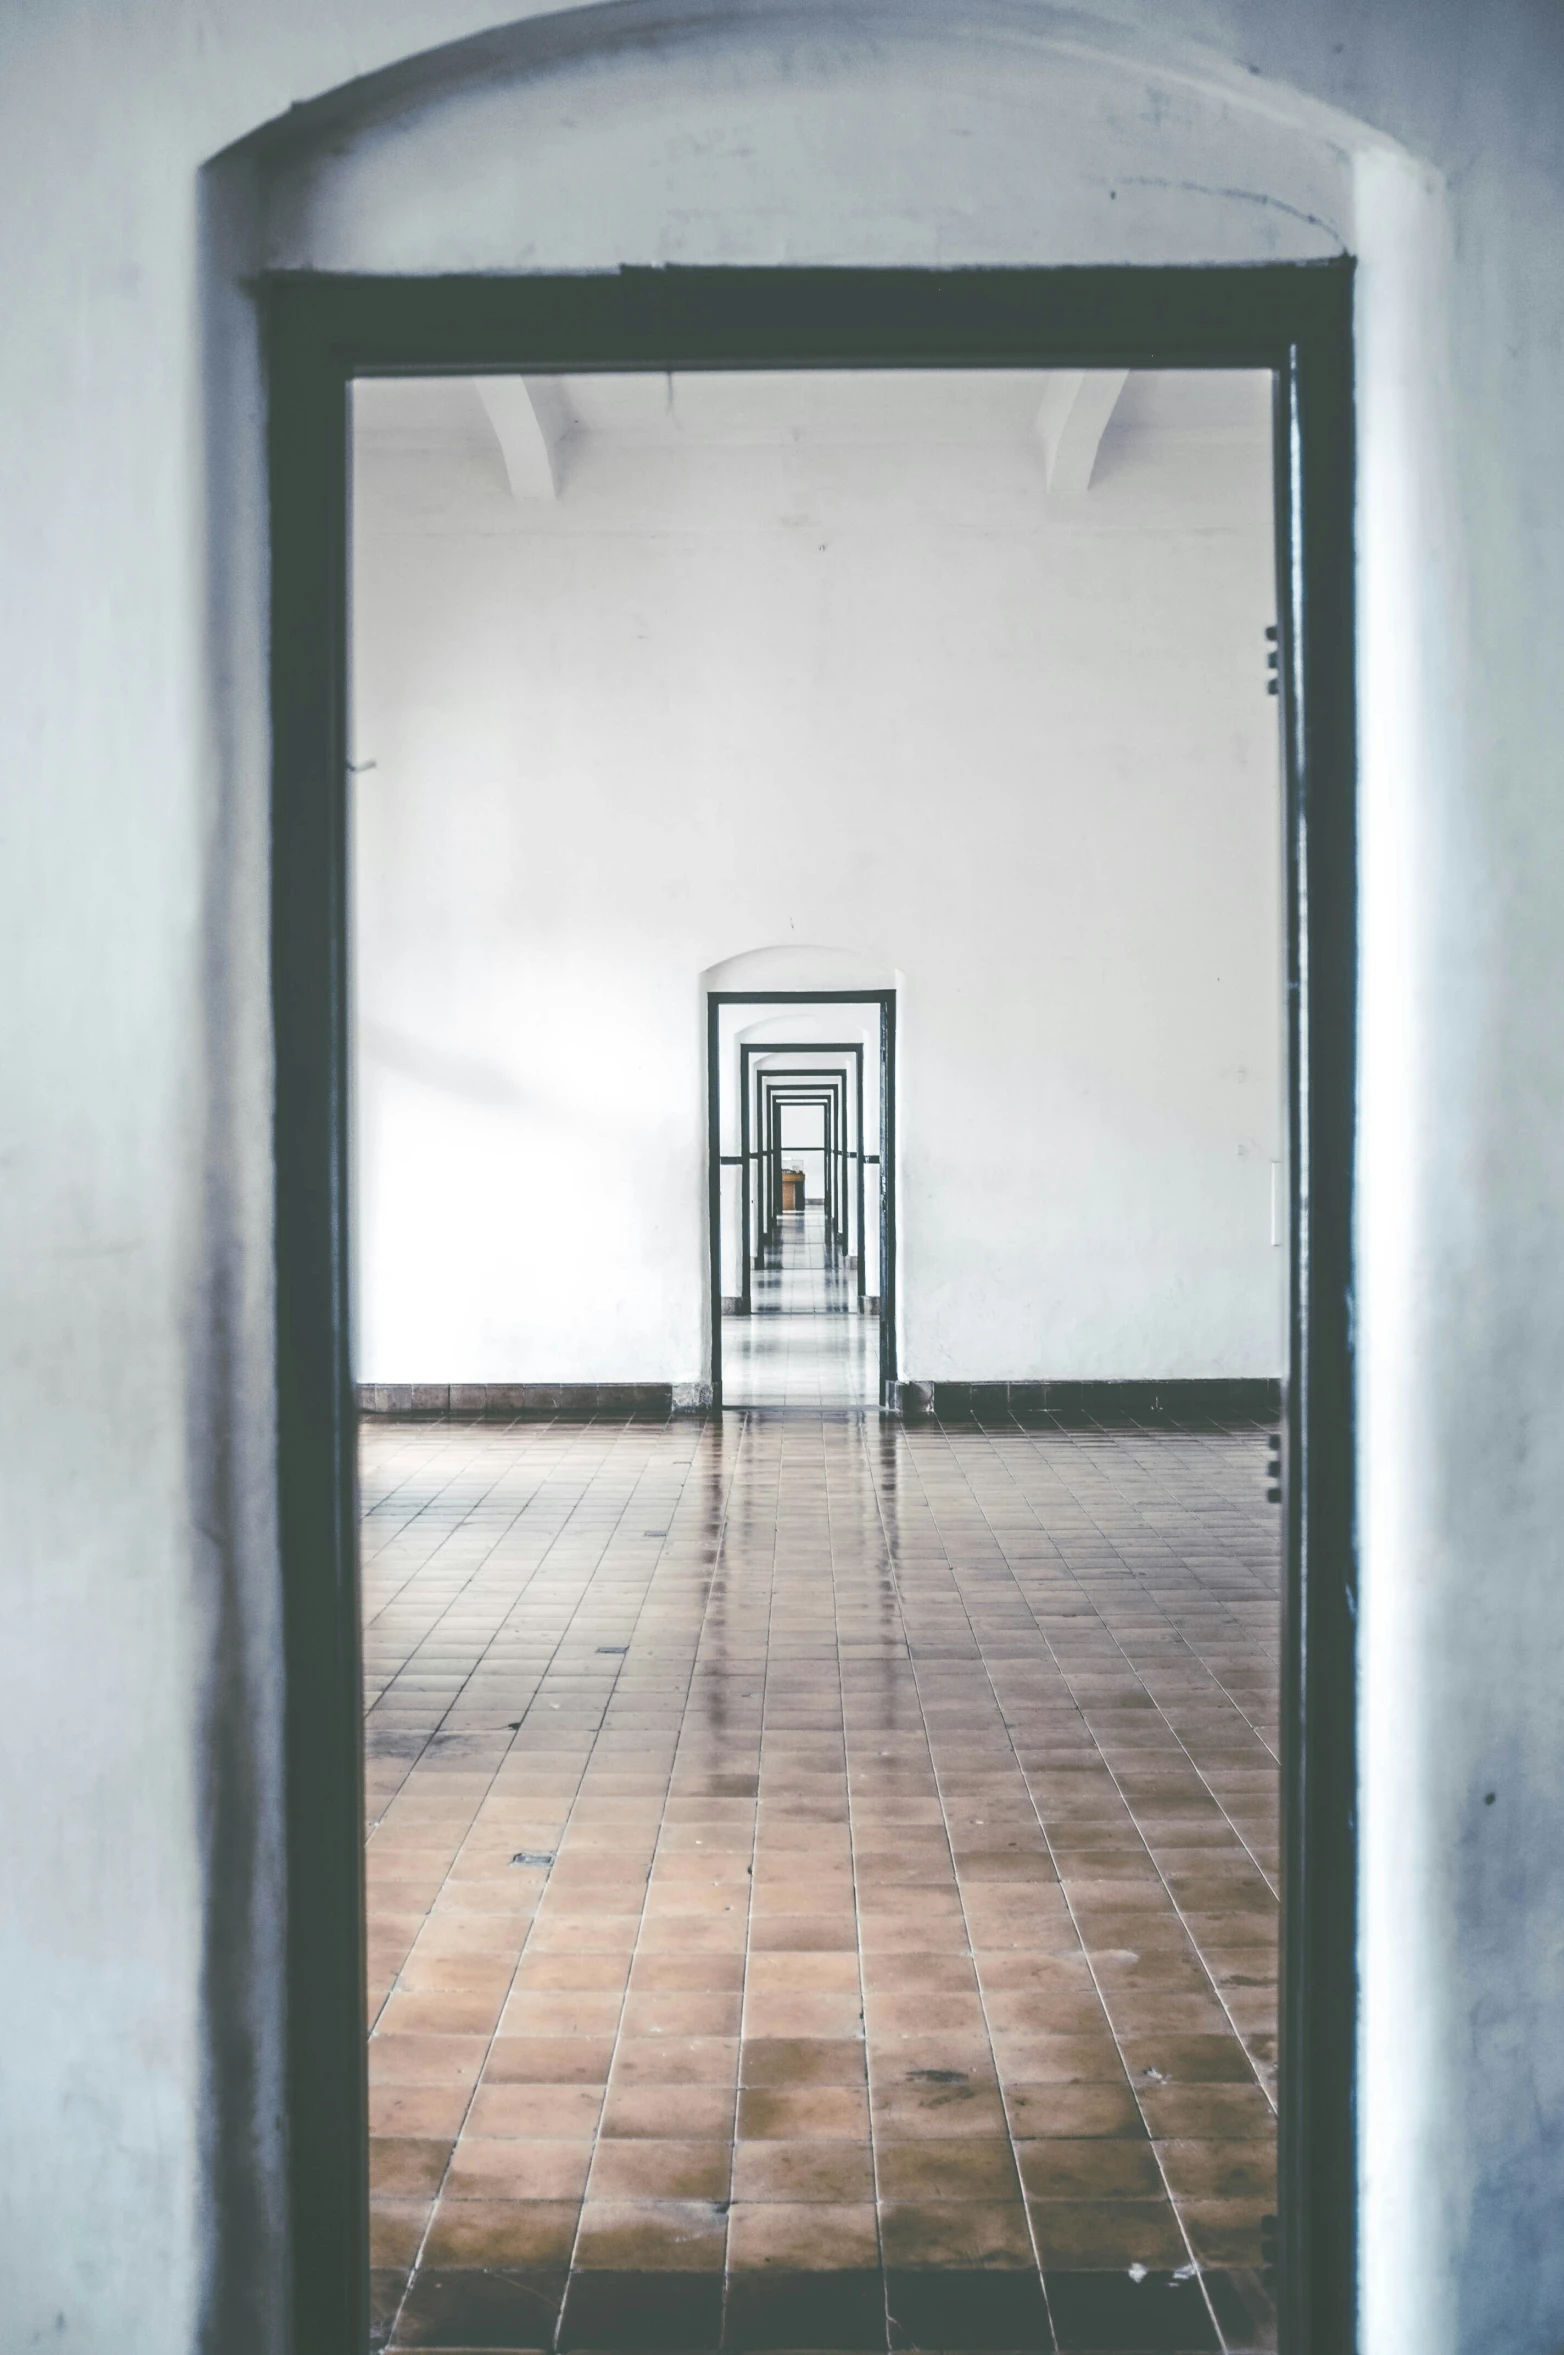 the door to an open, white room with tiled floor